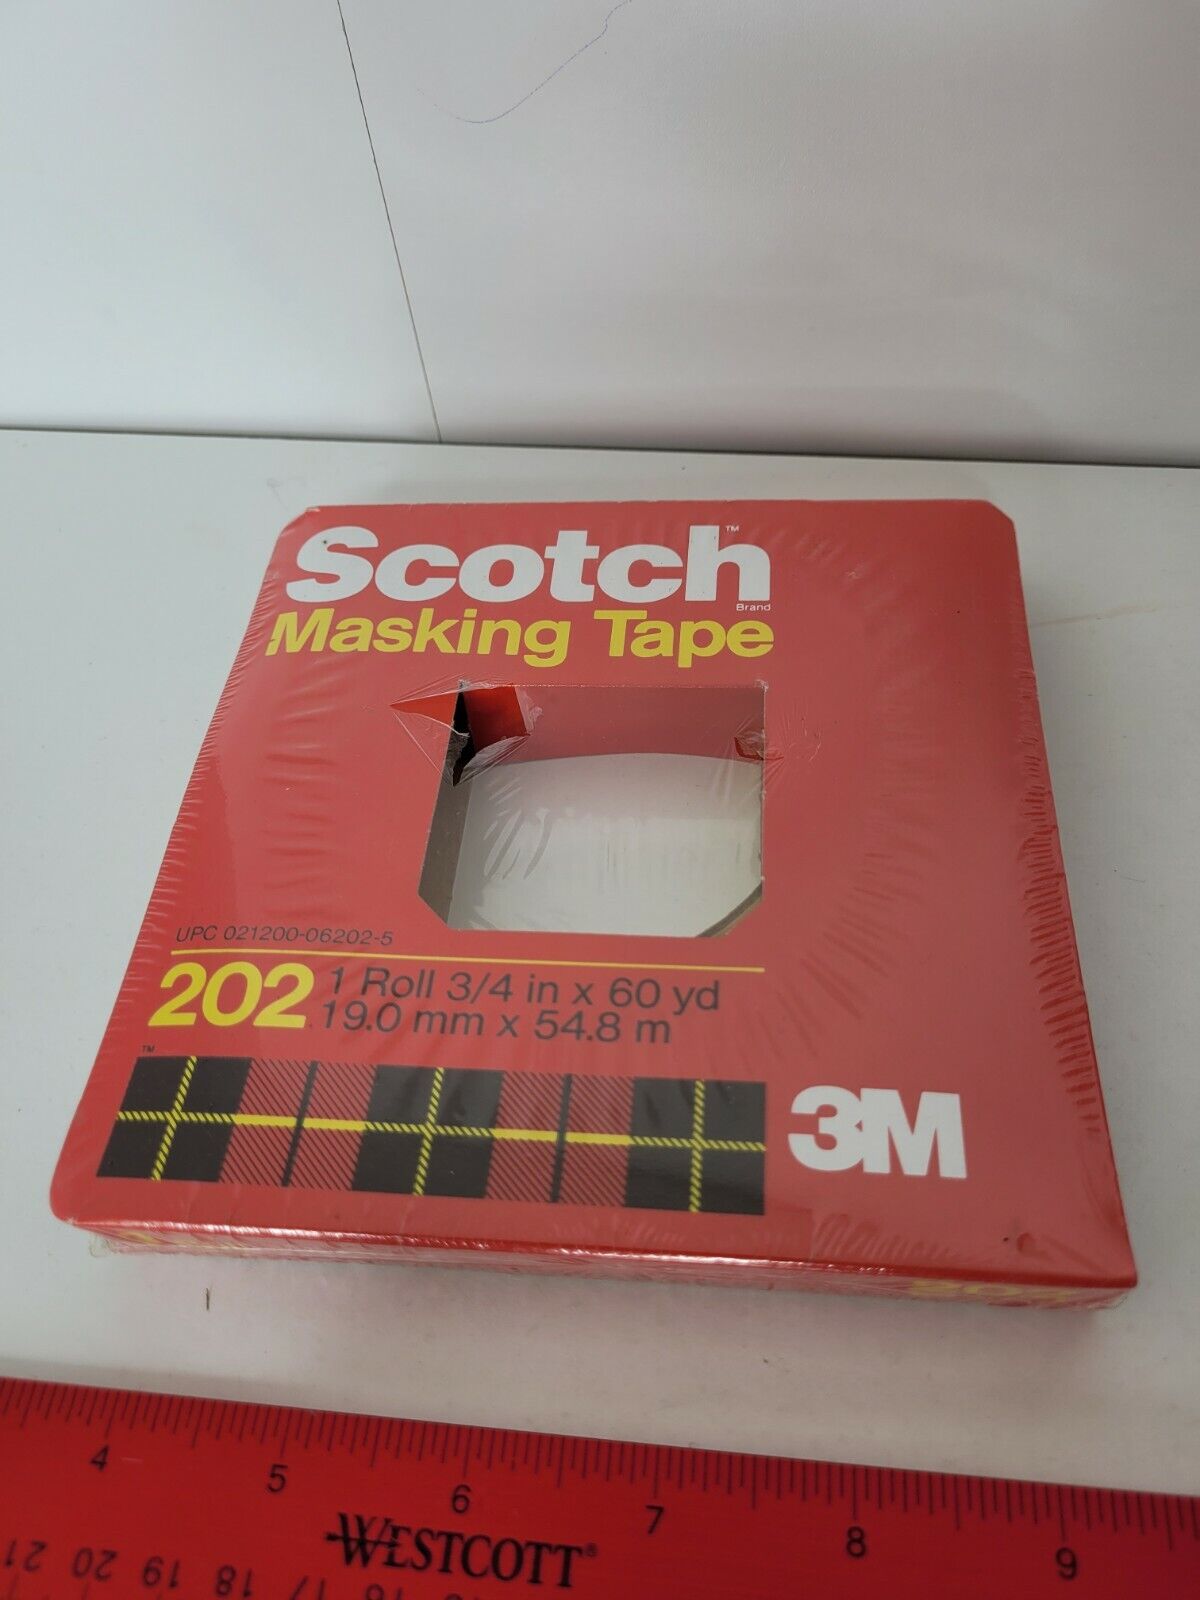 VTG 3M Scotch Crepe Masking Tape 202 Original Box 3/4 inch x 60 yd NOS Prop